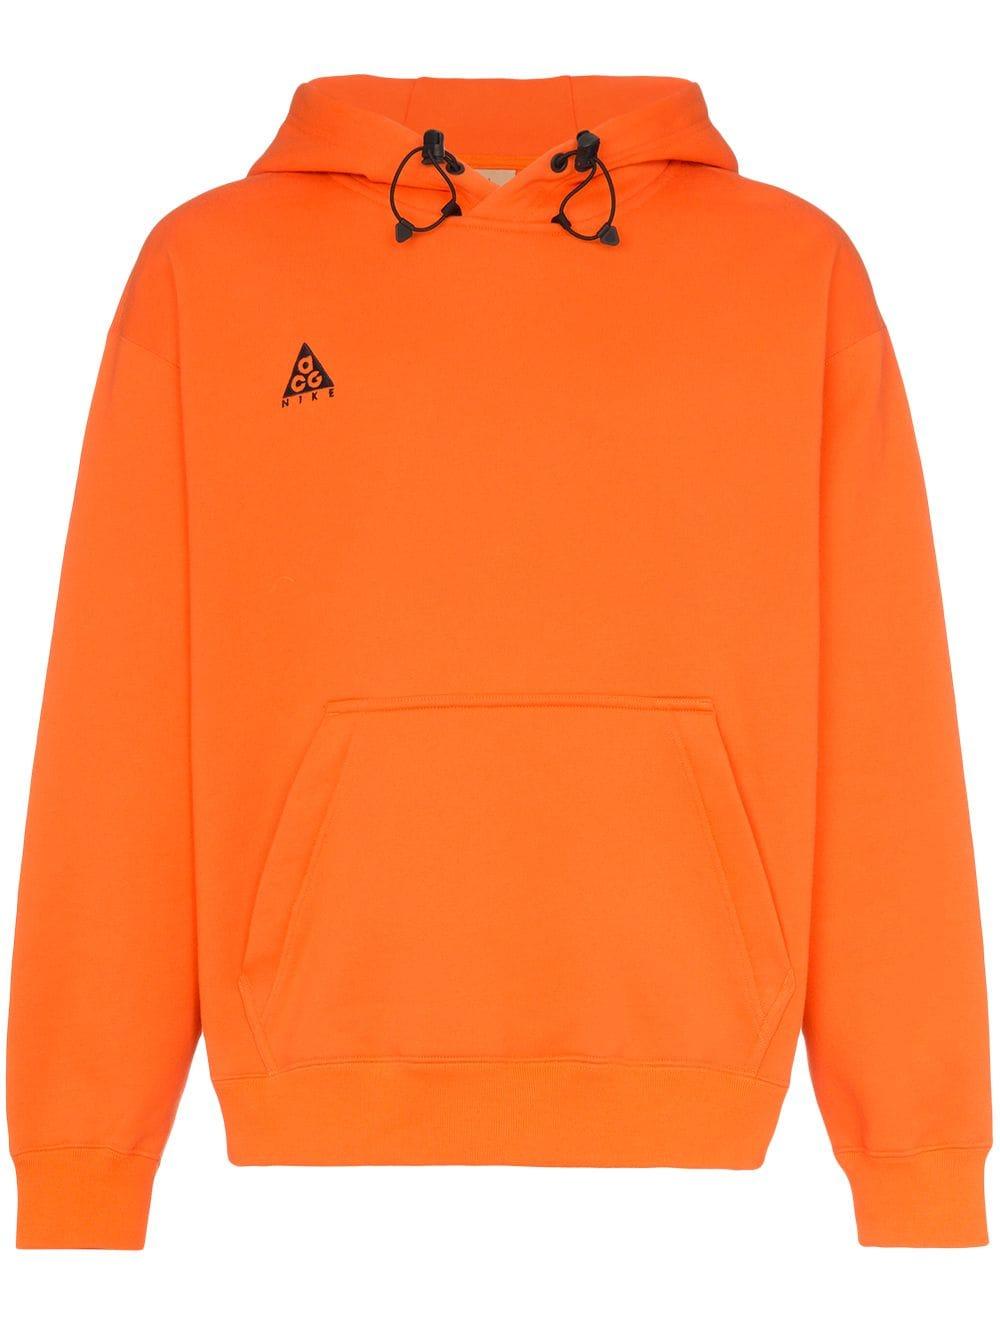 nike nrg hoodie orange